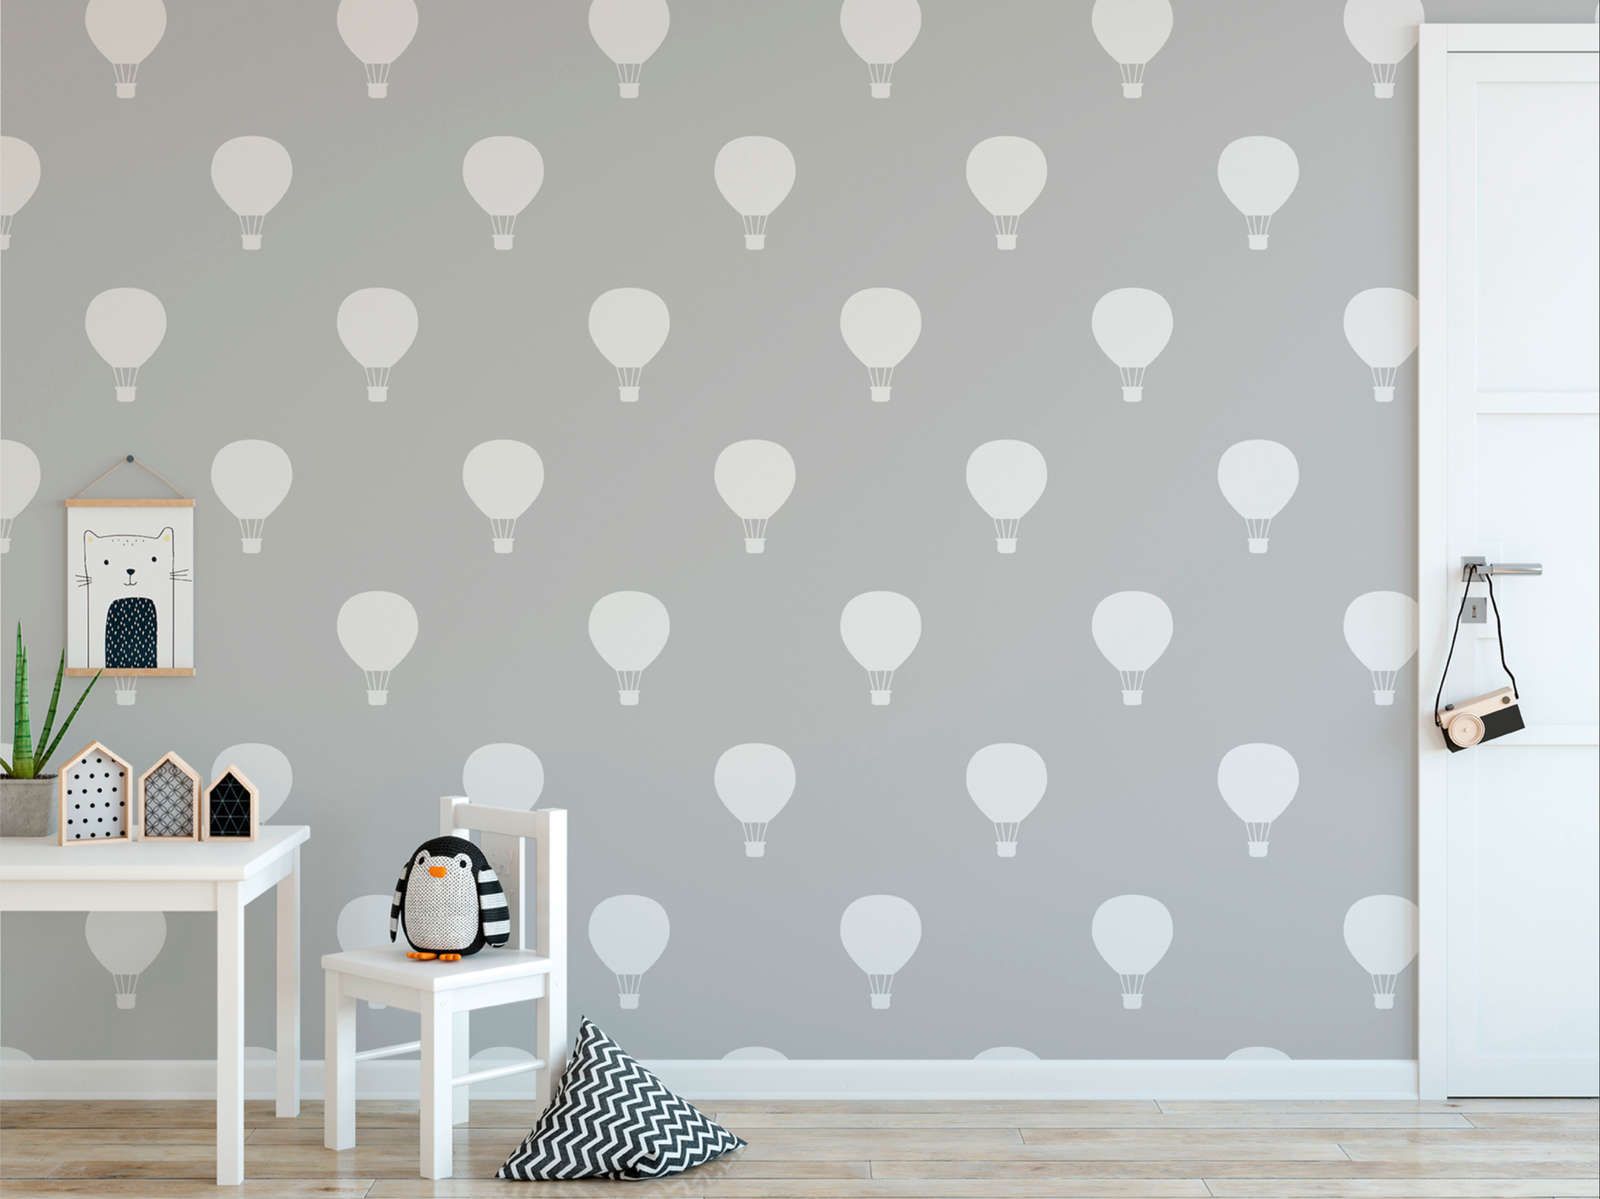 Children's wallpaper with hot air balloons